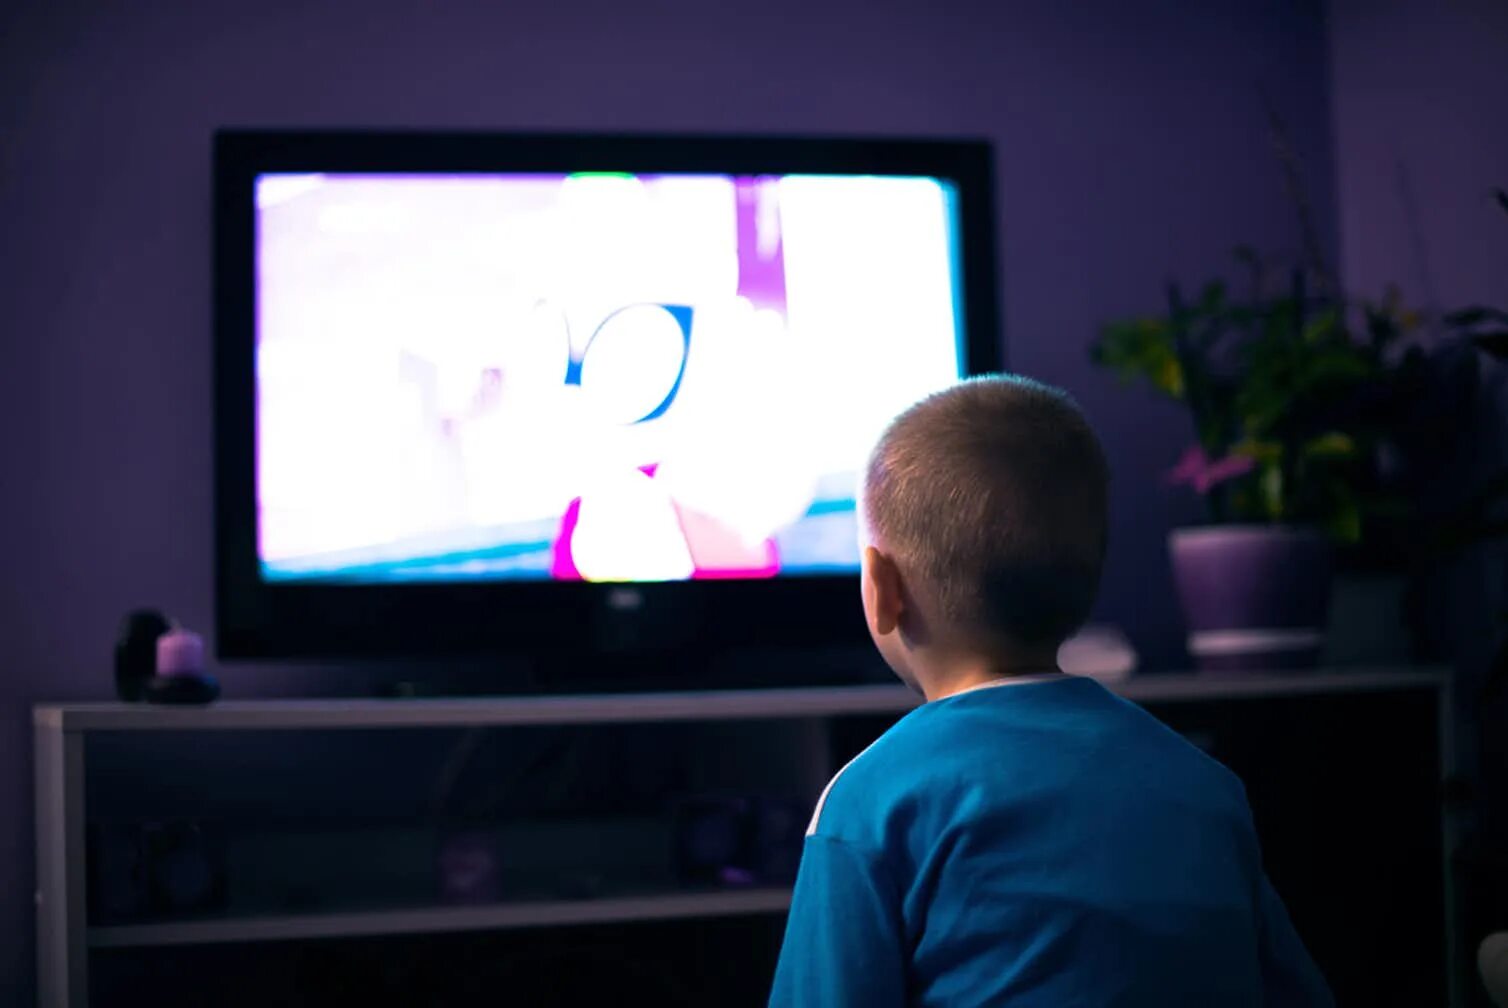 Включи свет смотрим. Мальчик у телевизора. Телевизор в темноте. Школьник у телевизора. Телевизор для детей.